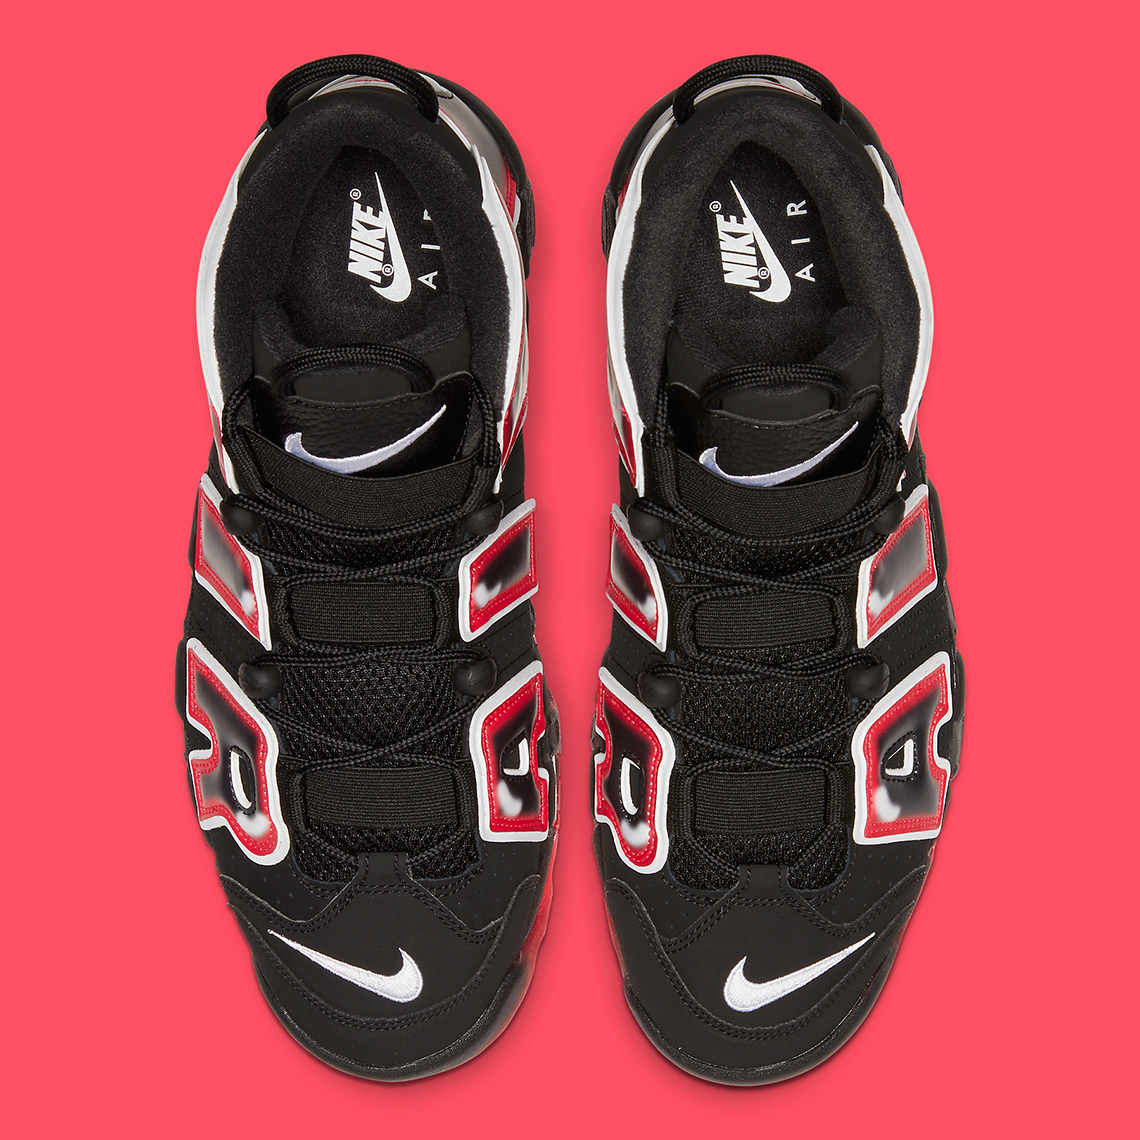 Nike Air More Uptempo Laser Crimson CJ6129-001 Release Date 